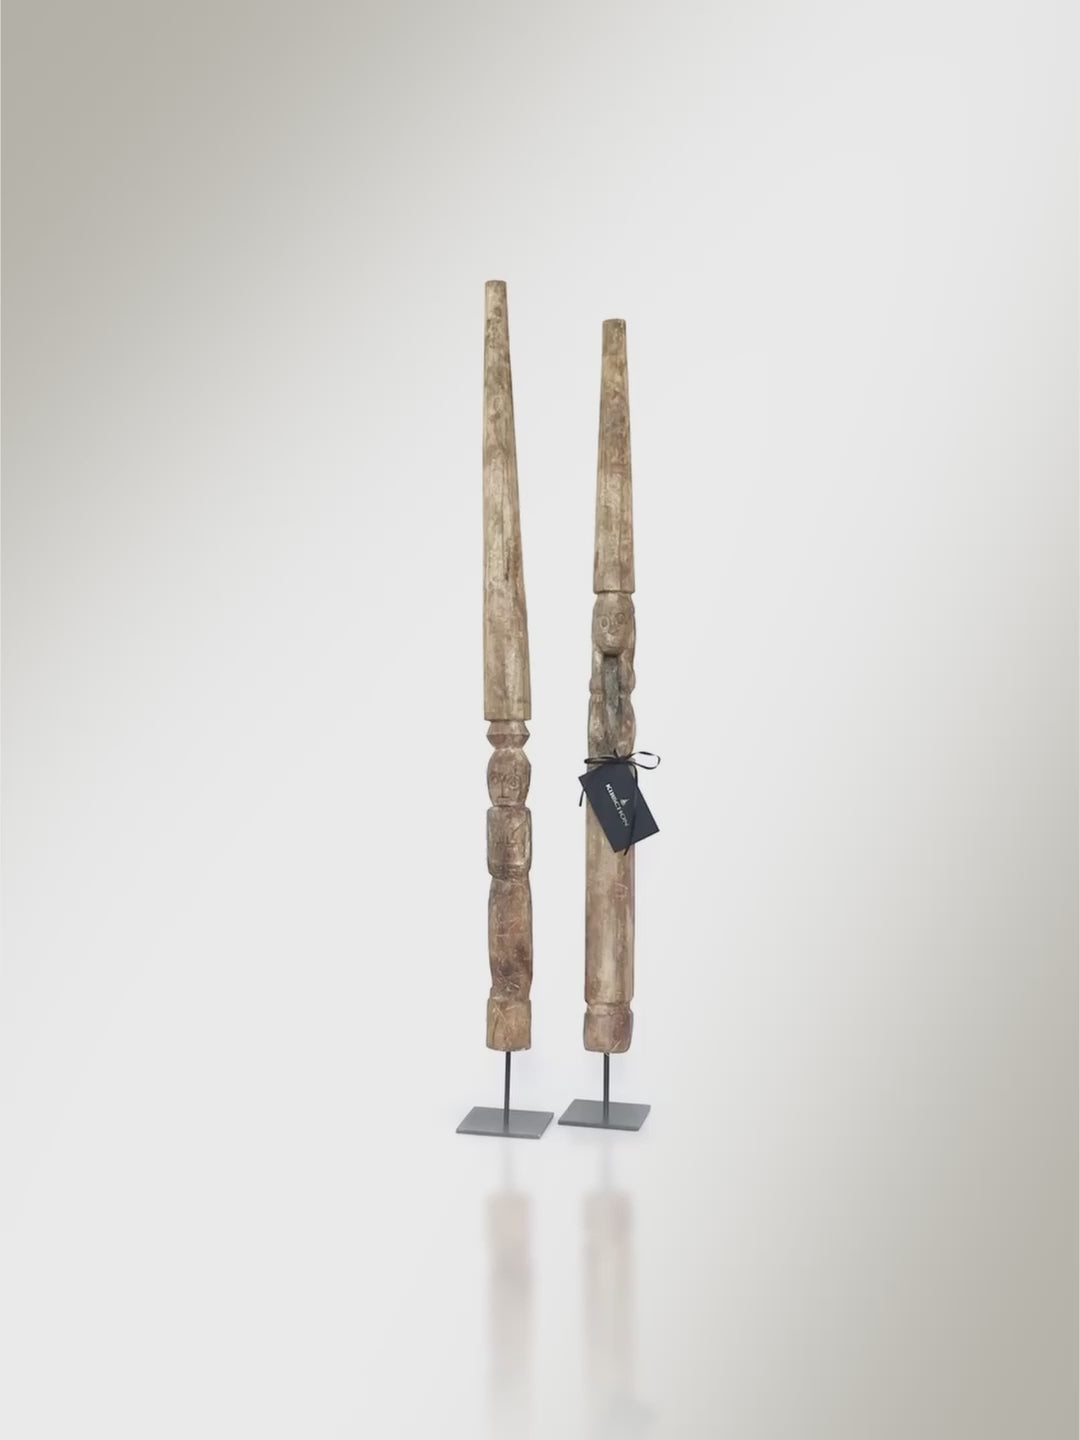 Set of 2 wooden figures from Sumba - Asian Art from Kirschon